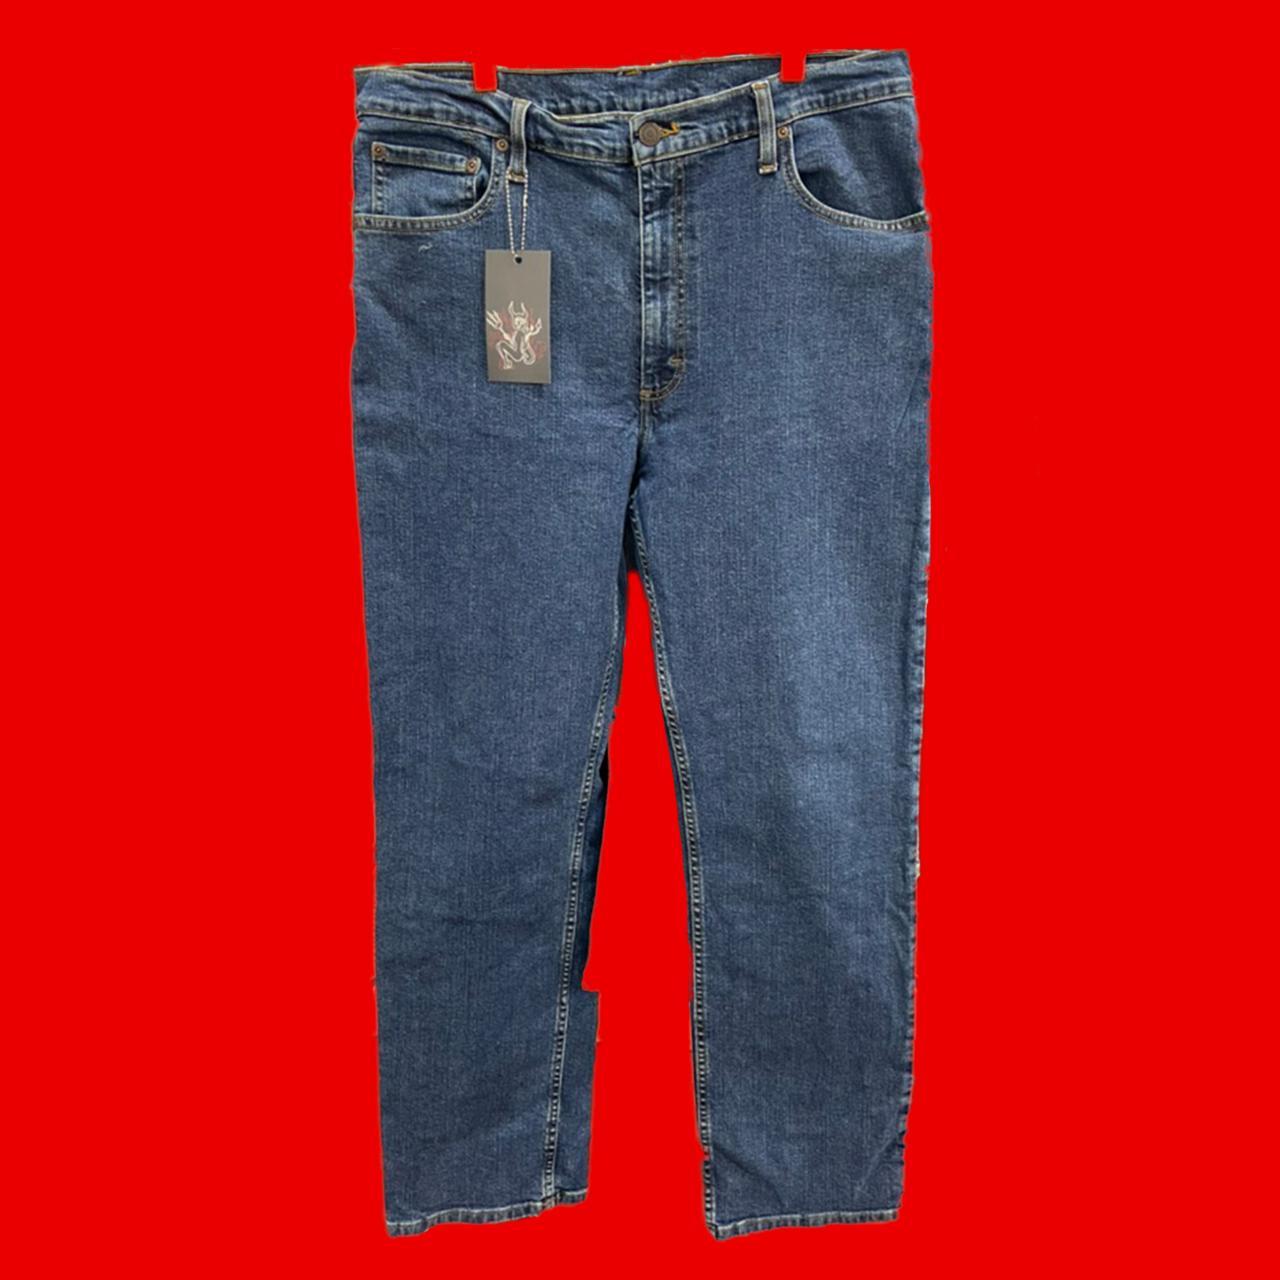 Wrangler dark wash straight leg jeans with original... - Depop